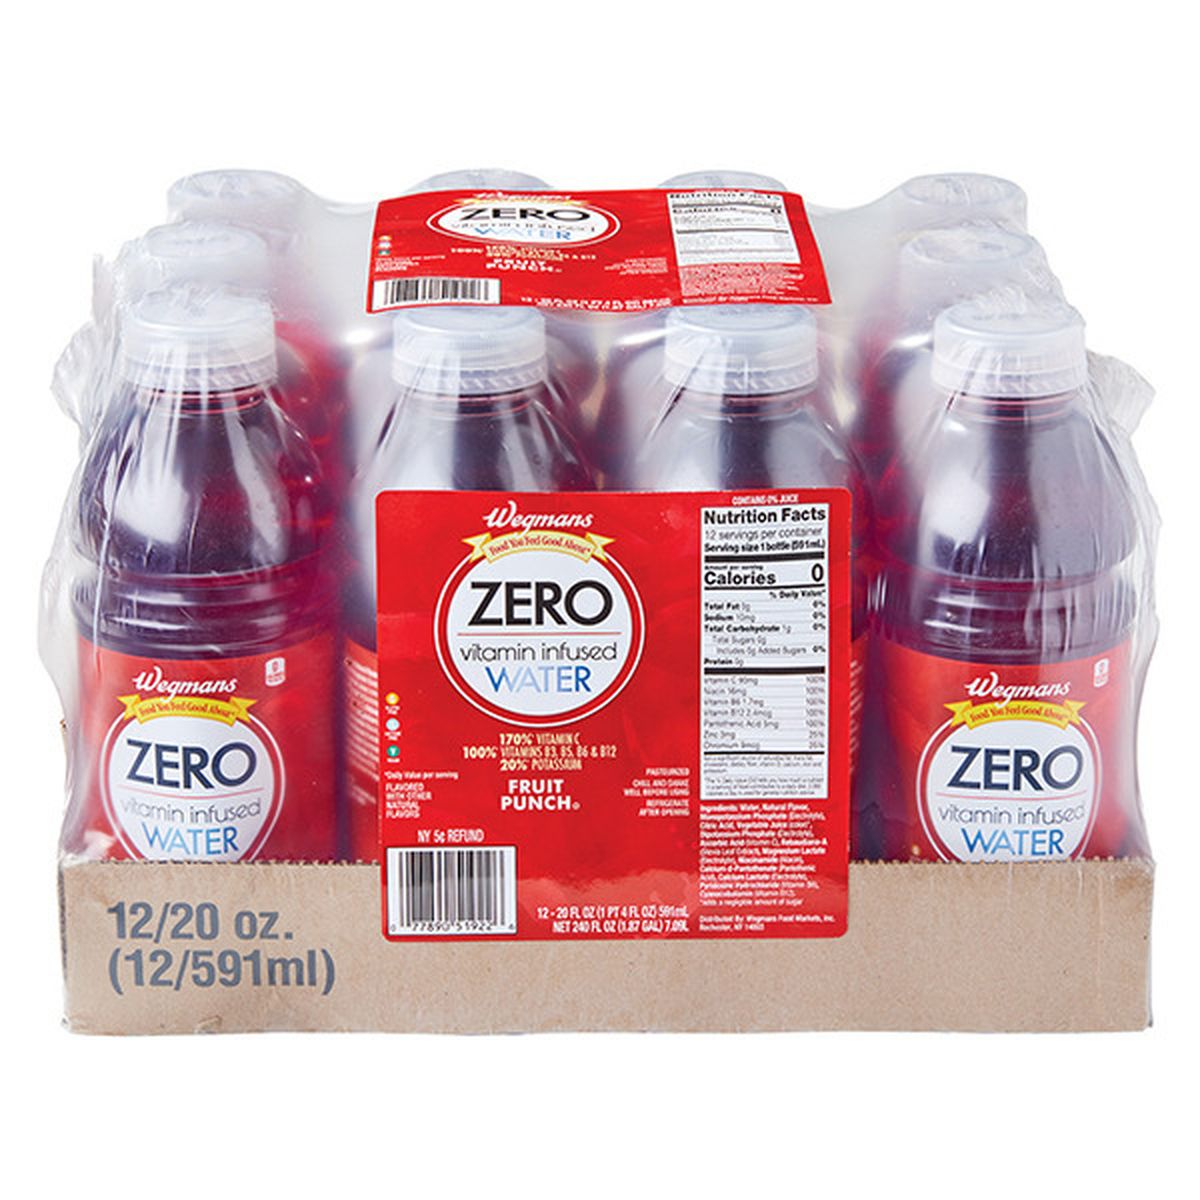 Calories in Wegmans Zero Vitamin Infused Water, Fruit Punch, 12 Pack